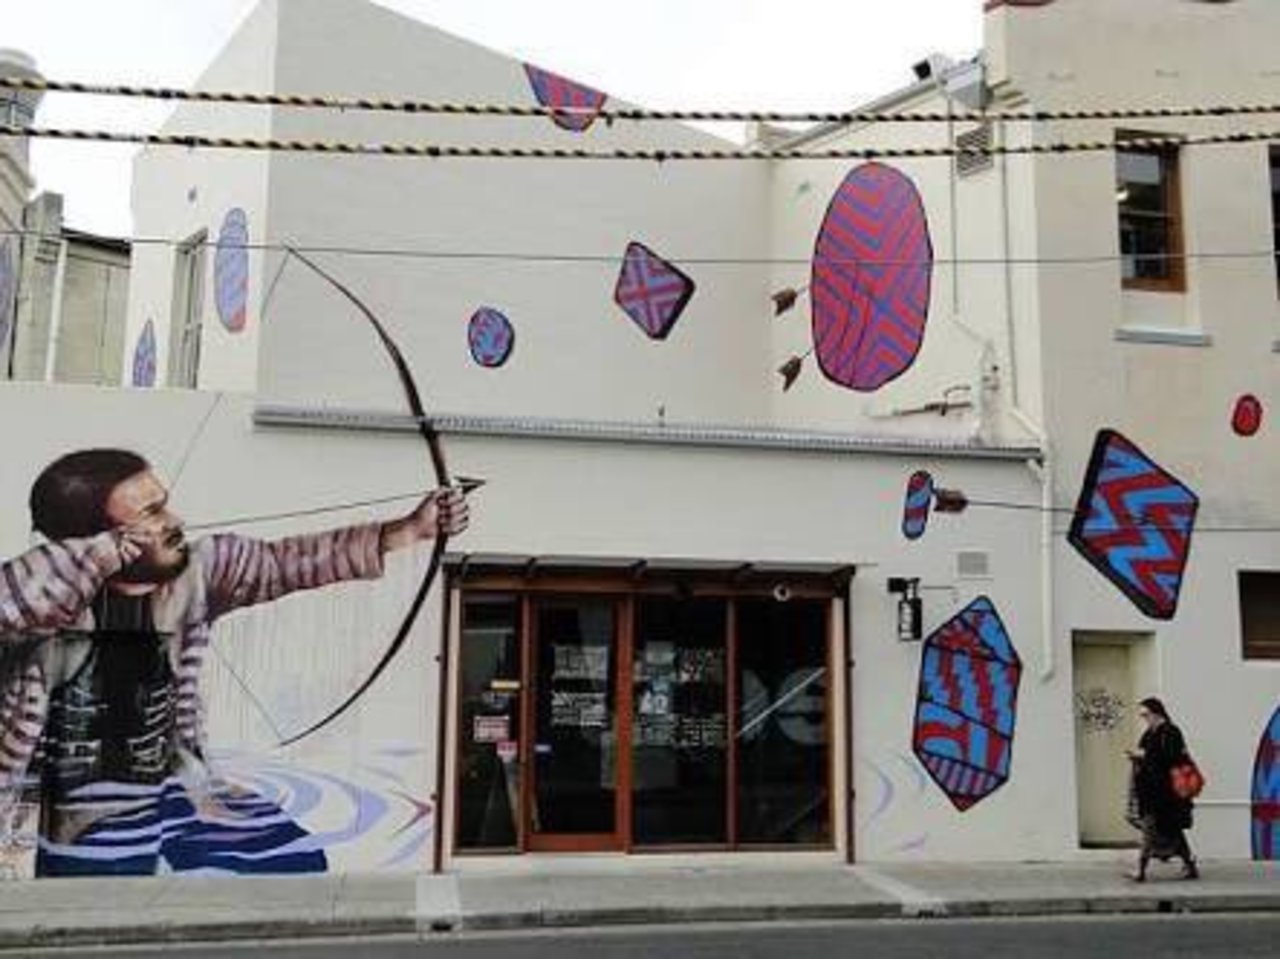 Mural by Fintan Magee, Sydney, Australia #Streetart #urbanart #graffiti #mural #art #Sydney #Australia https://t.co/vJetvlQiAE